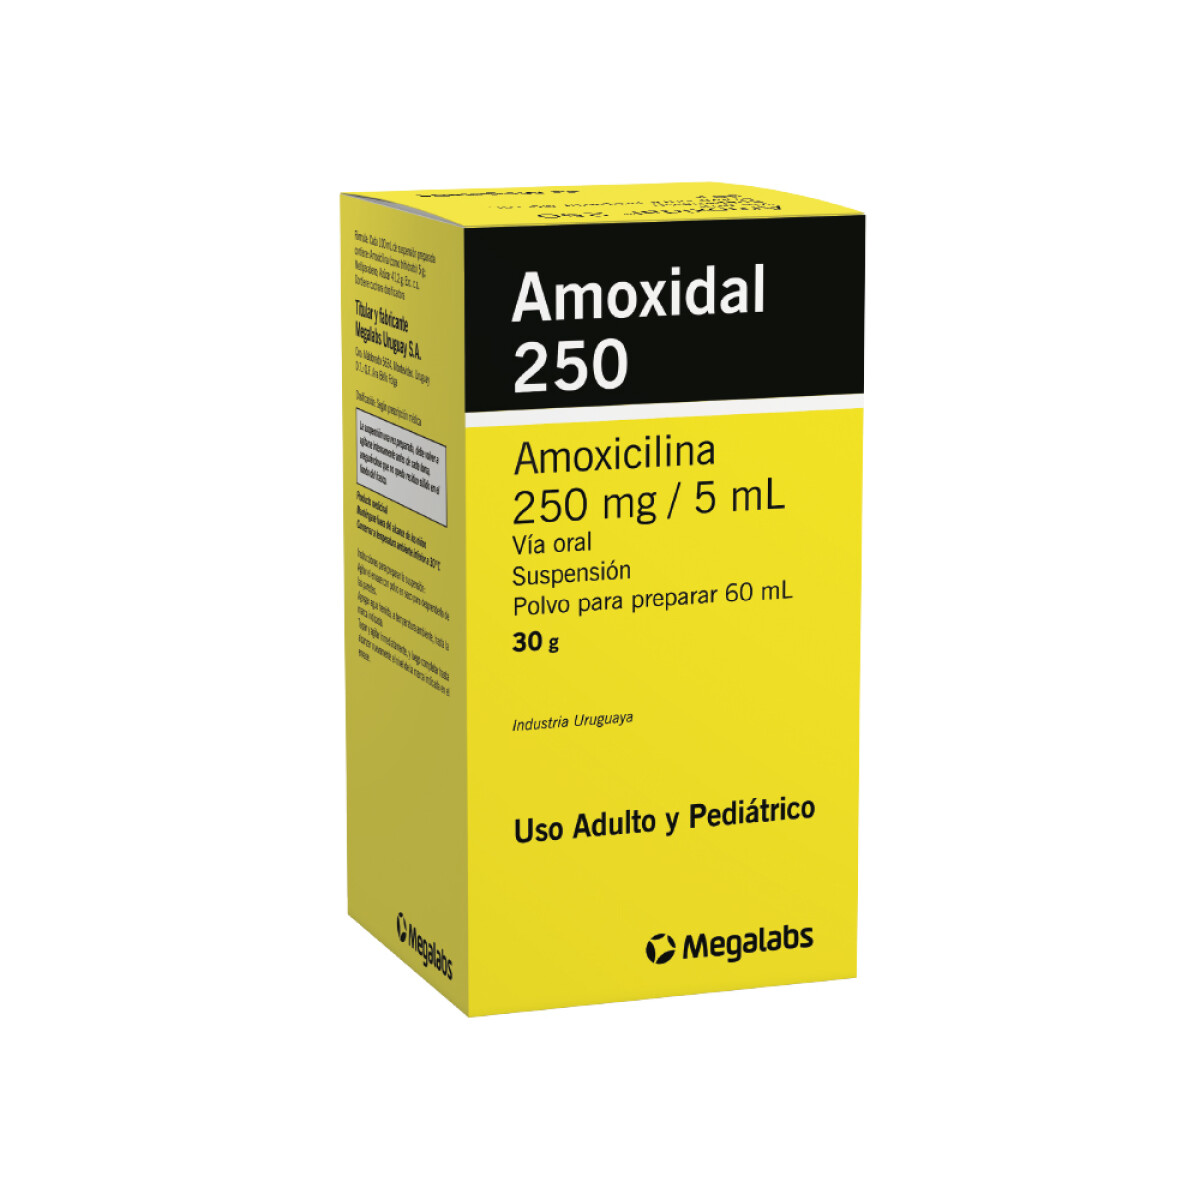 Amoxidal Suspensión 250 Mg. 60 Ml. 